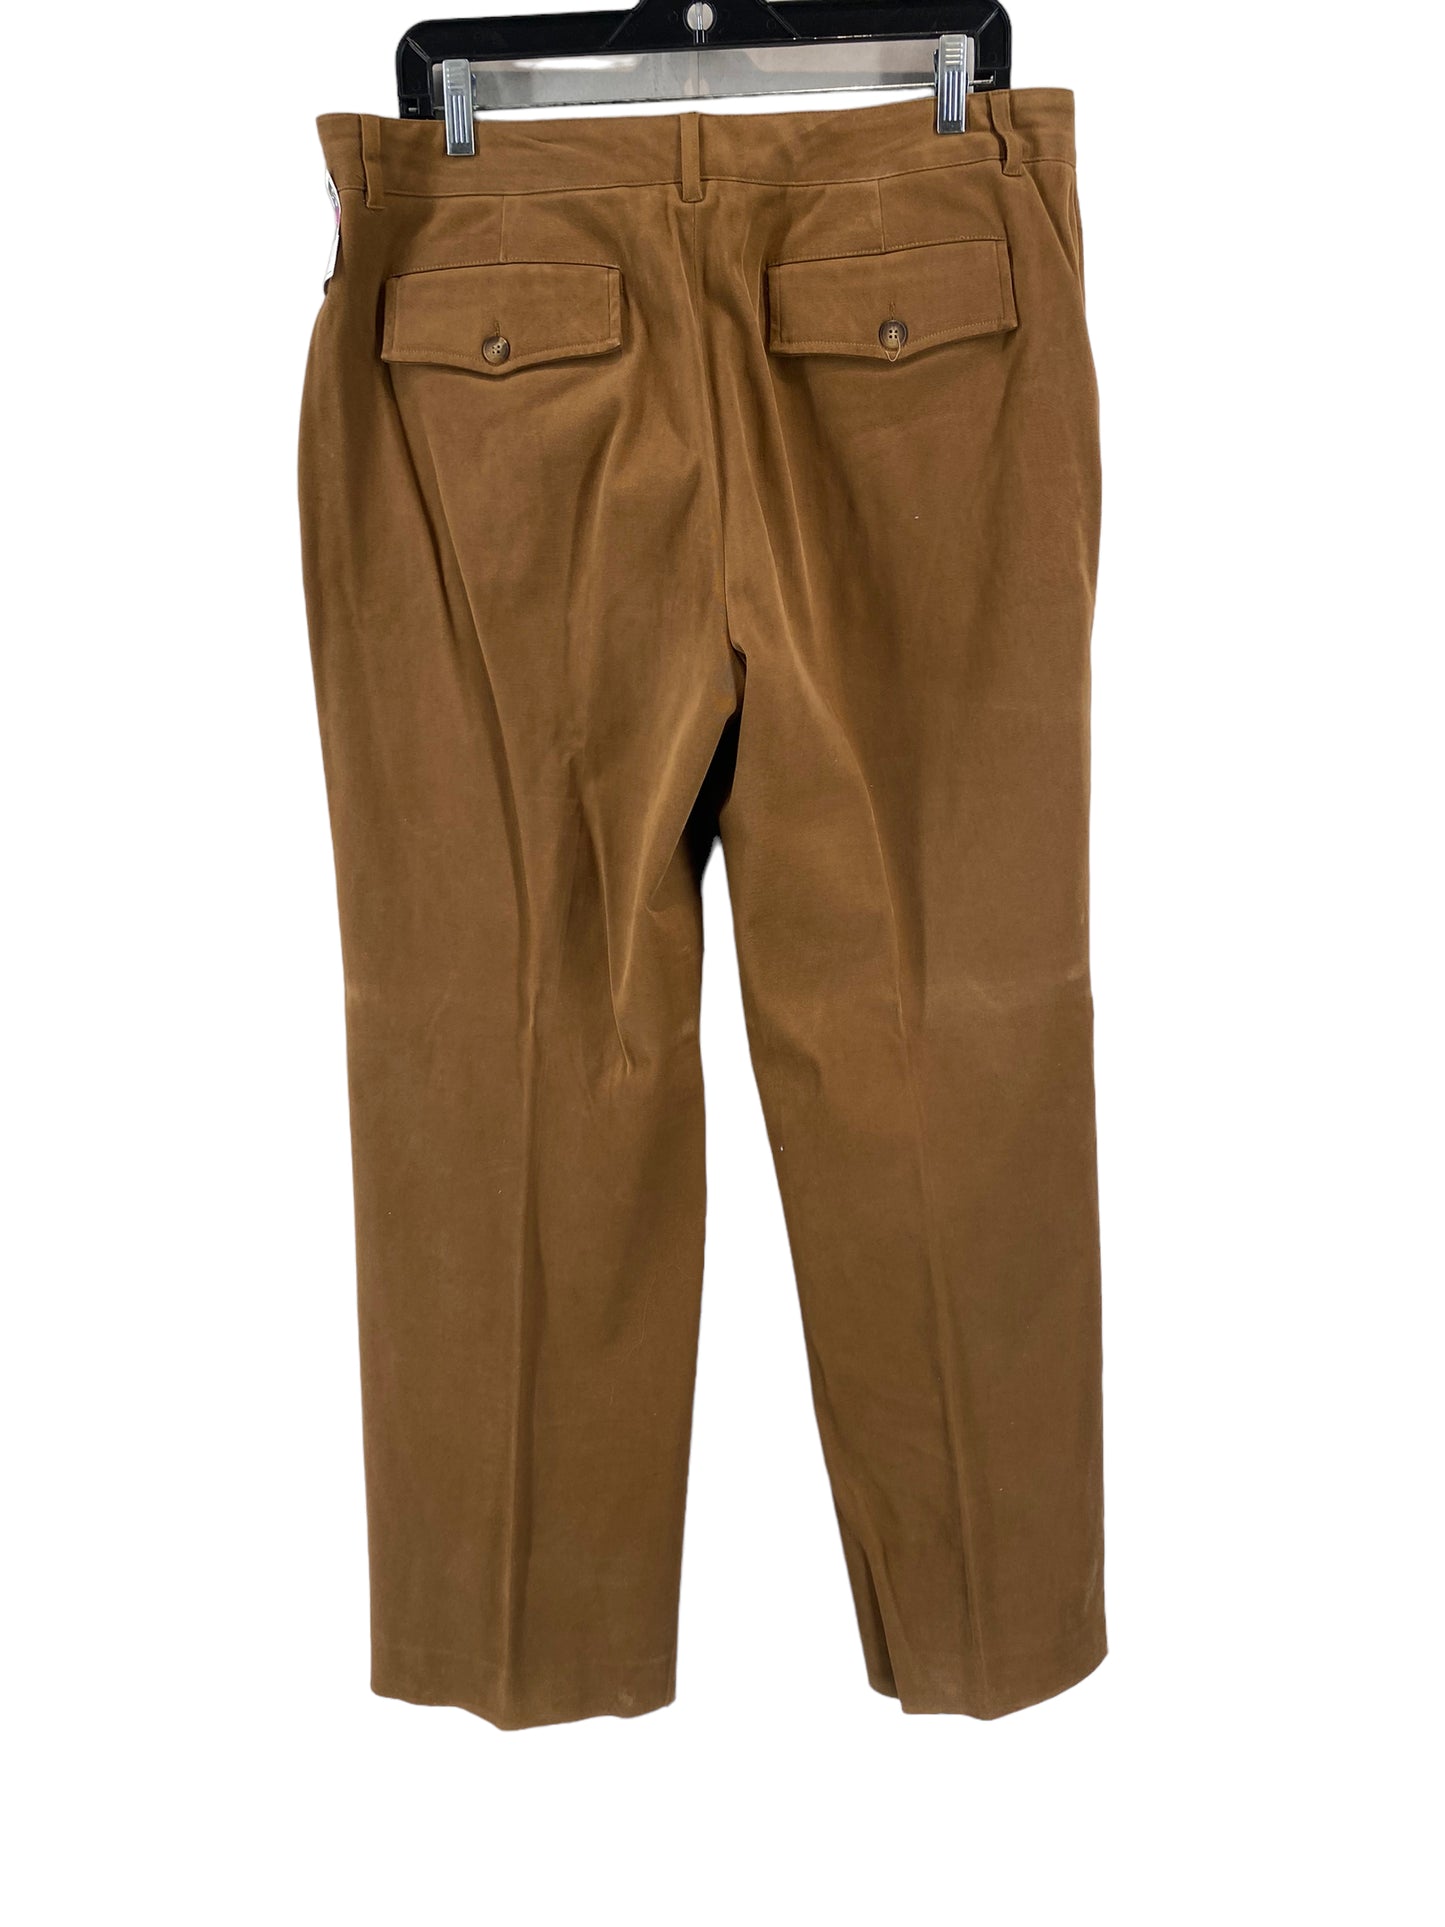 Pants Work/dress By Jones New York  Size: L